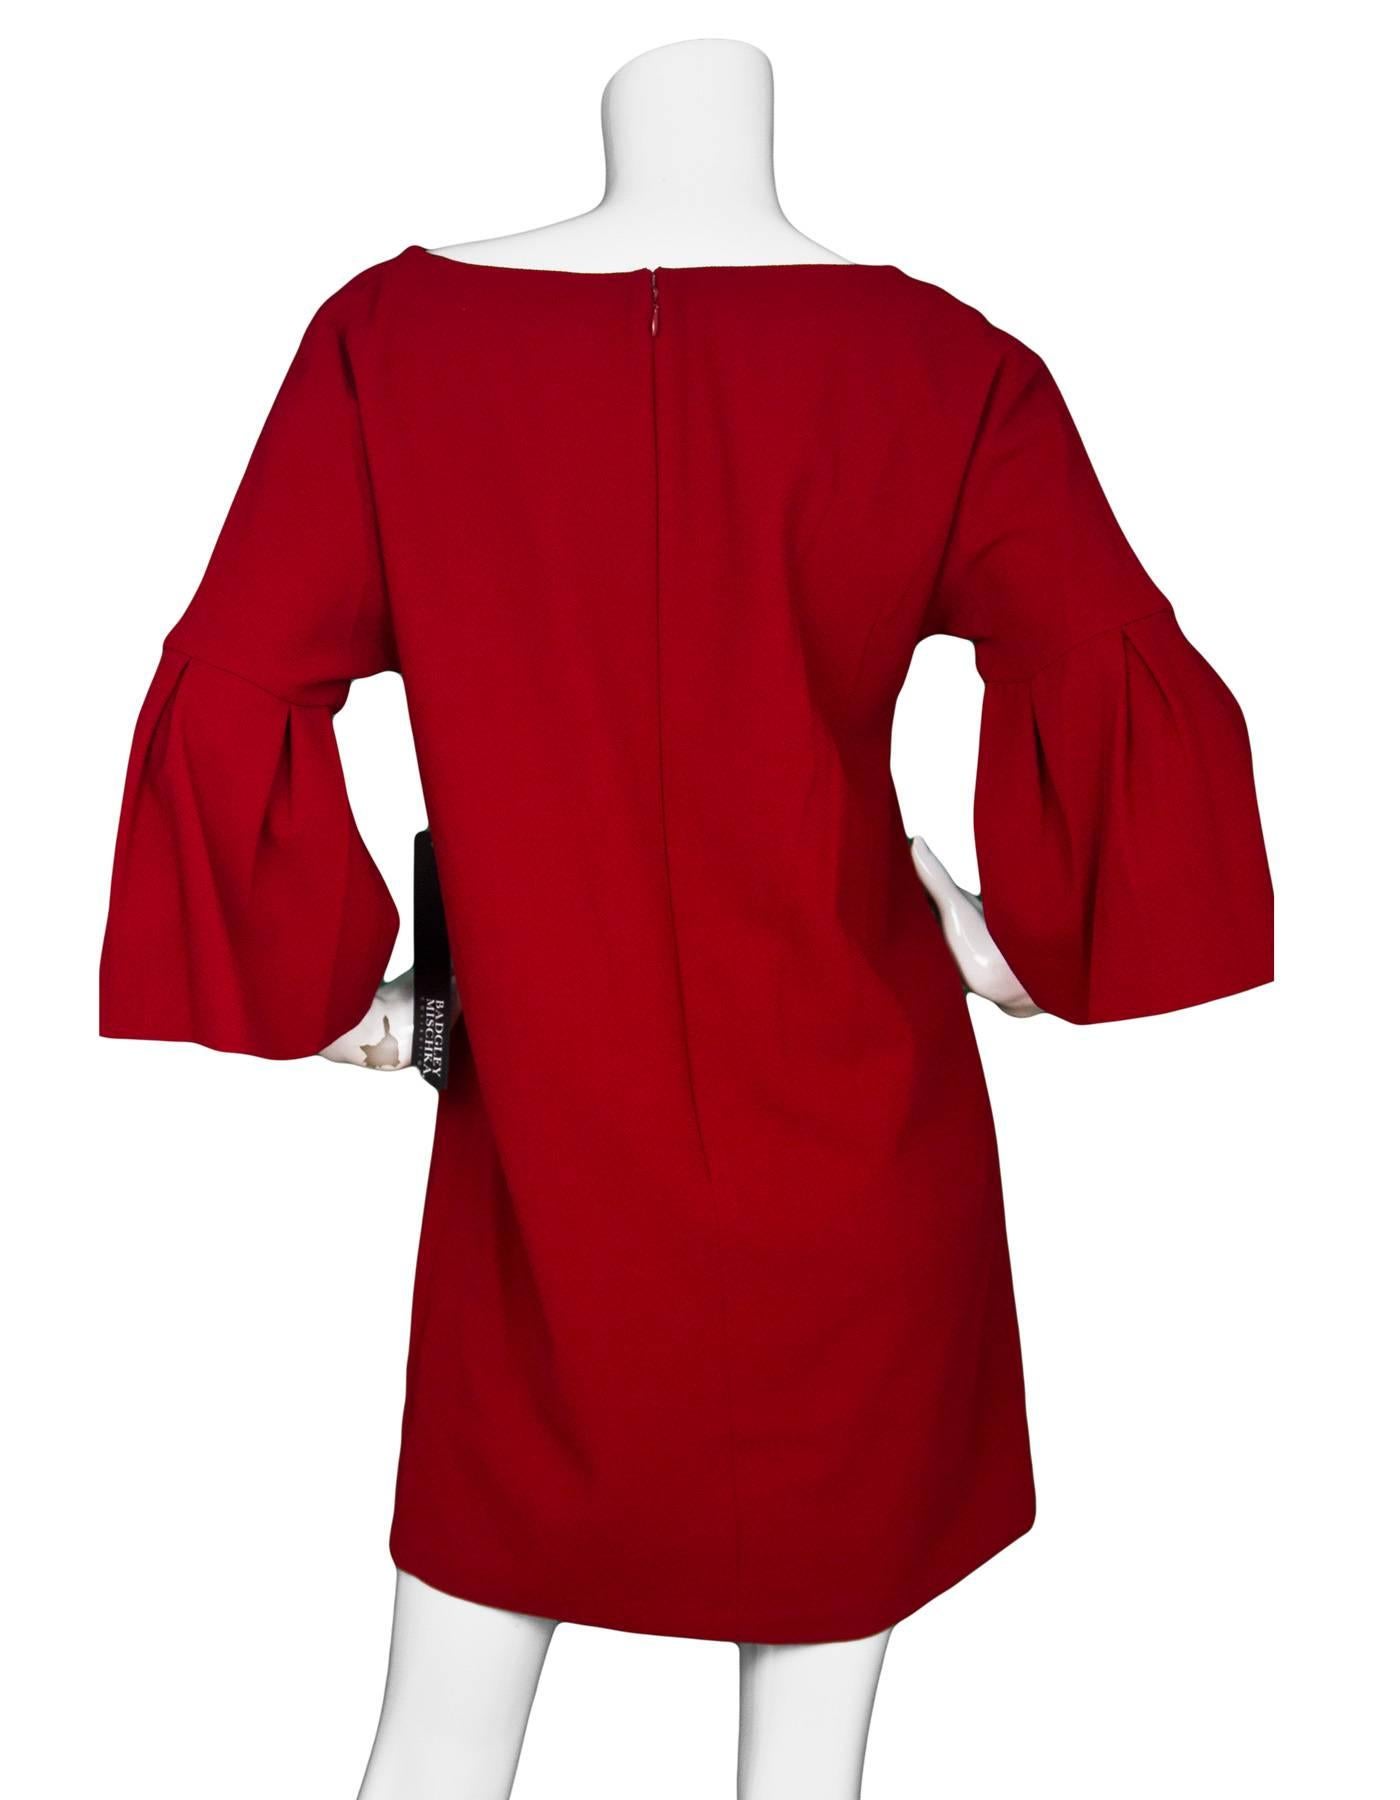 badgley mischka red dress